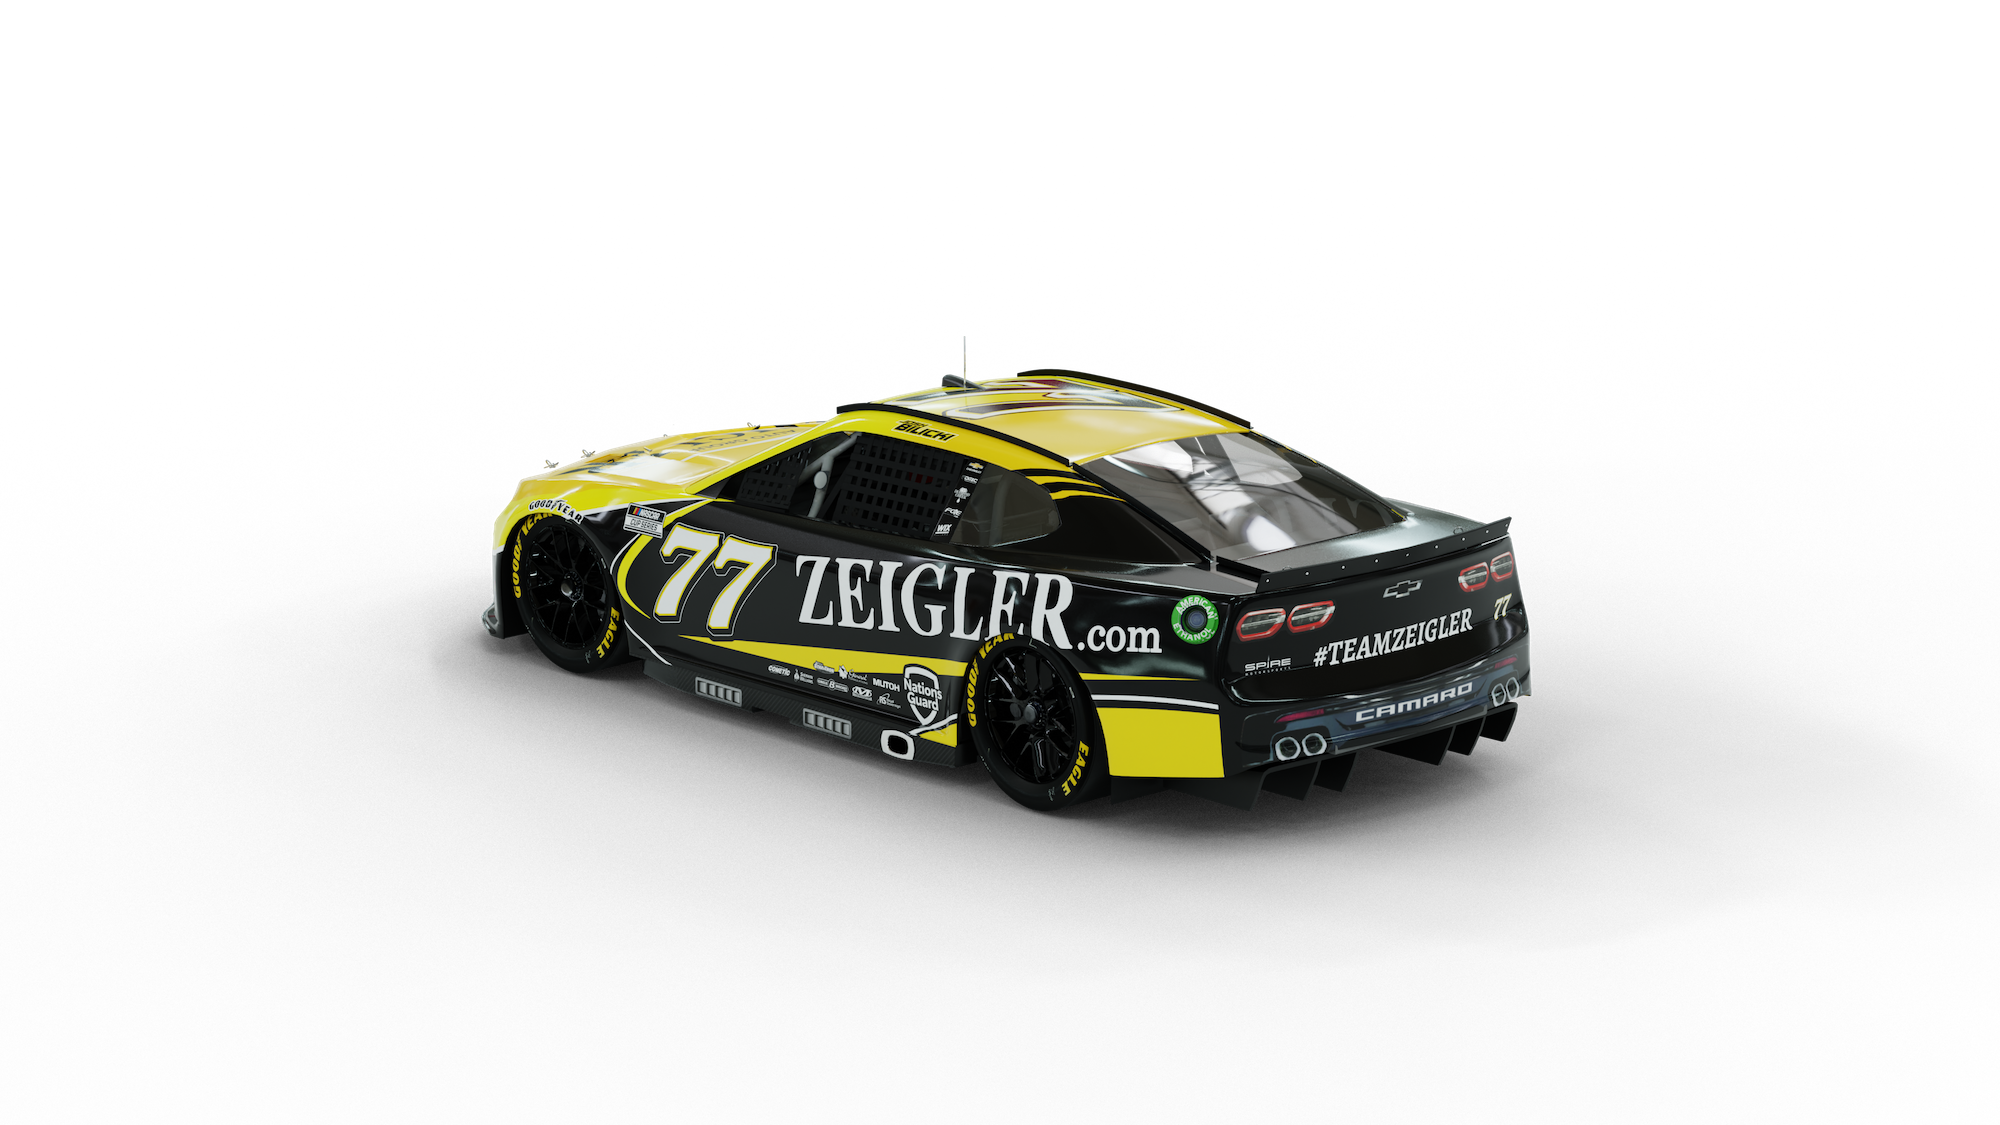 Back Right Side View - Josh Bilicki’s Zeigler-sponsored No. 77 for Spire Motorsports #TEAMZEIGLER